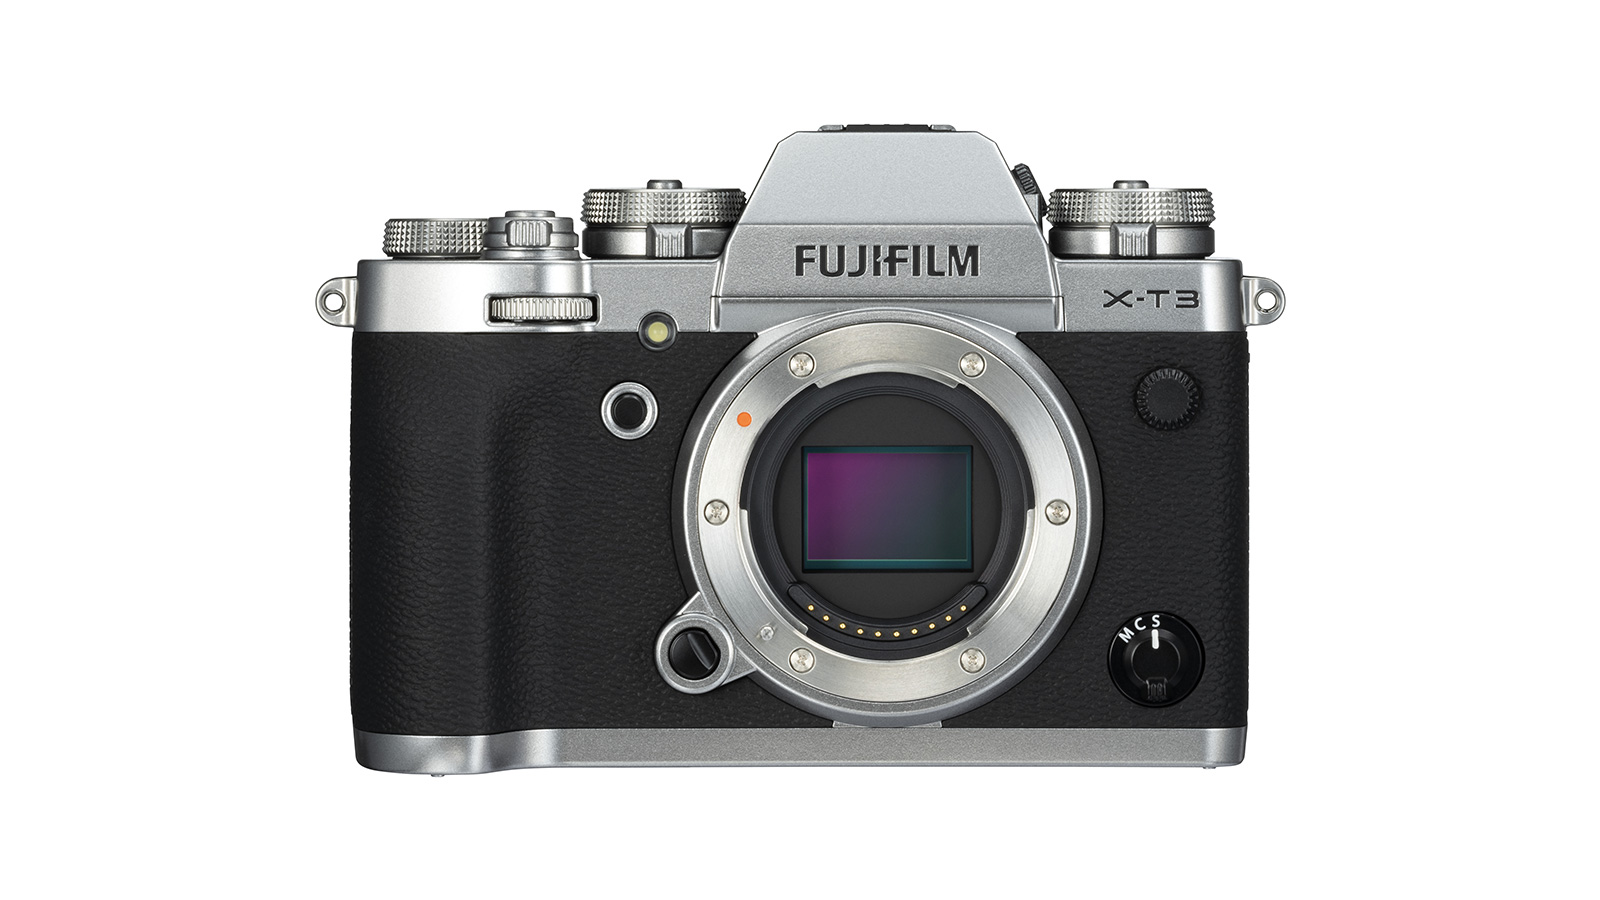 Fujifilm X-T3 front